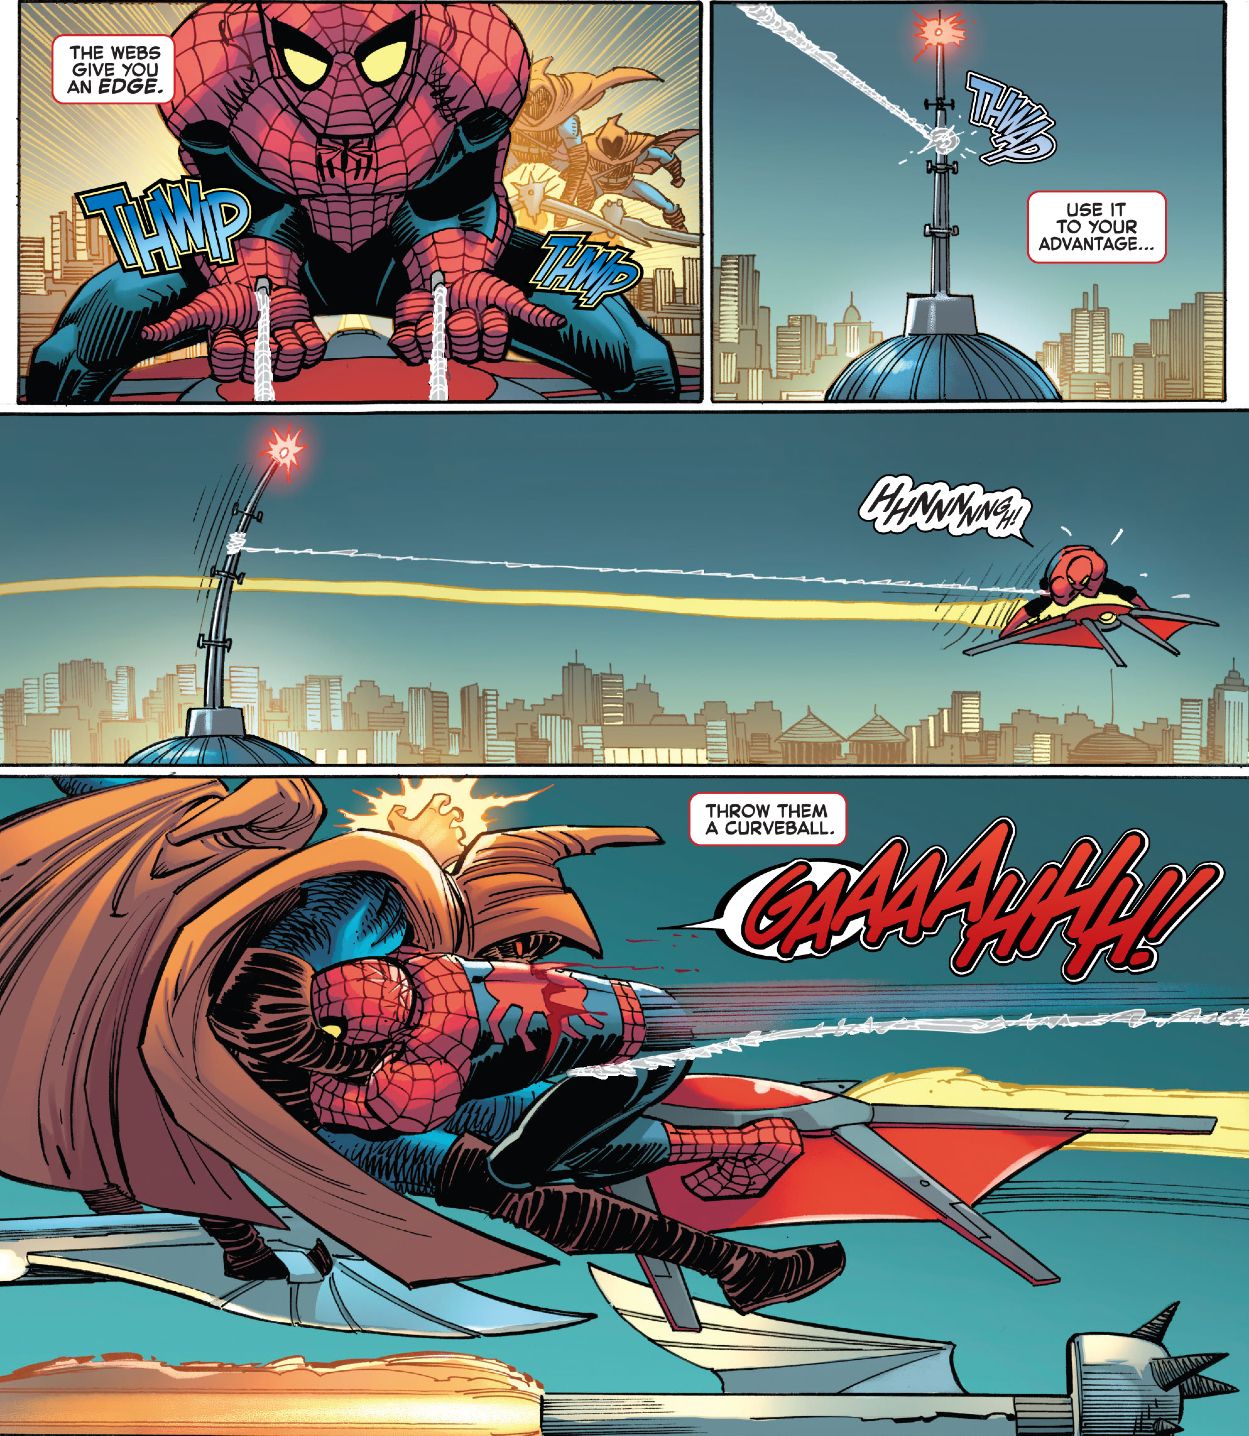 The Amazing Spider-Man #13 Spider-Man and Hobgoblin